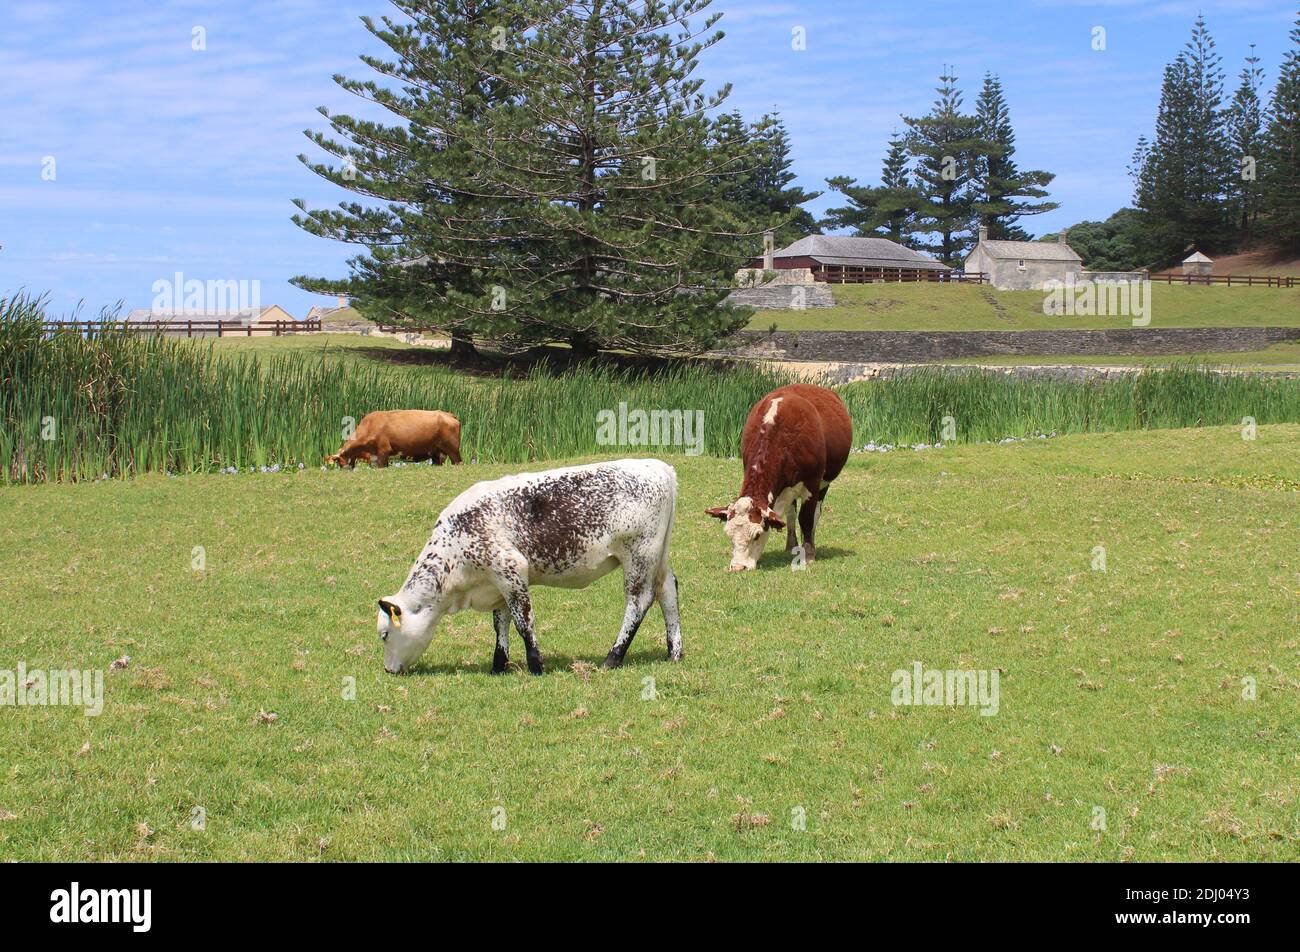 Isla Norfolk, Territorio exterior Australiano, vacas de pastoreo abierto dentro del Área del Patrimonio Mundial de Kingston. Foto de stock